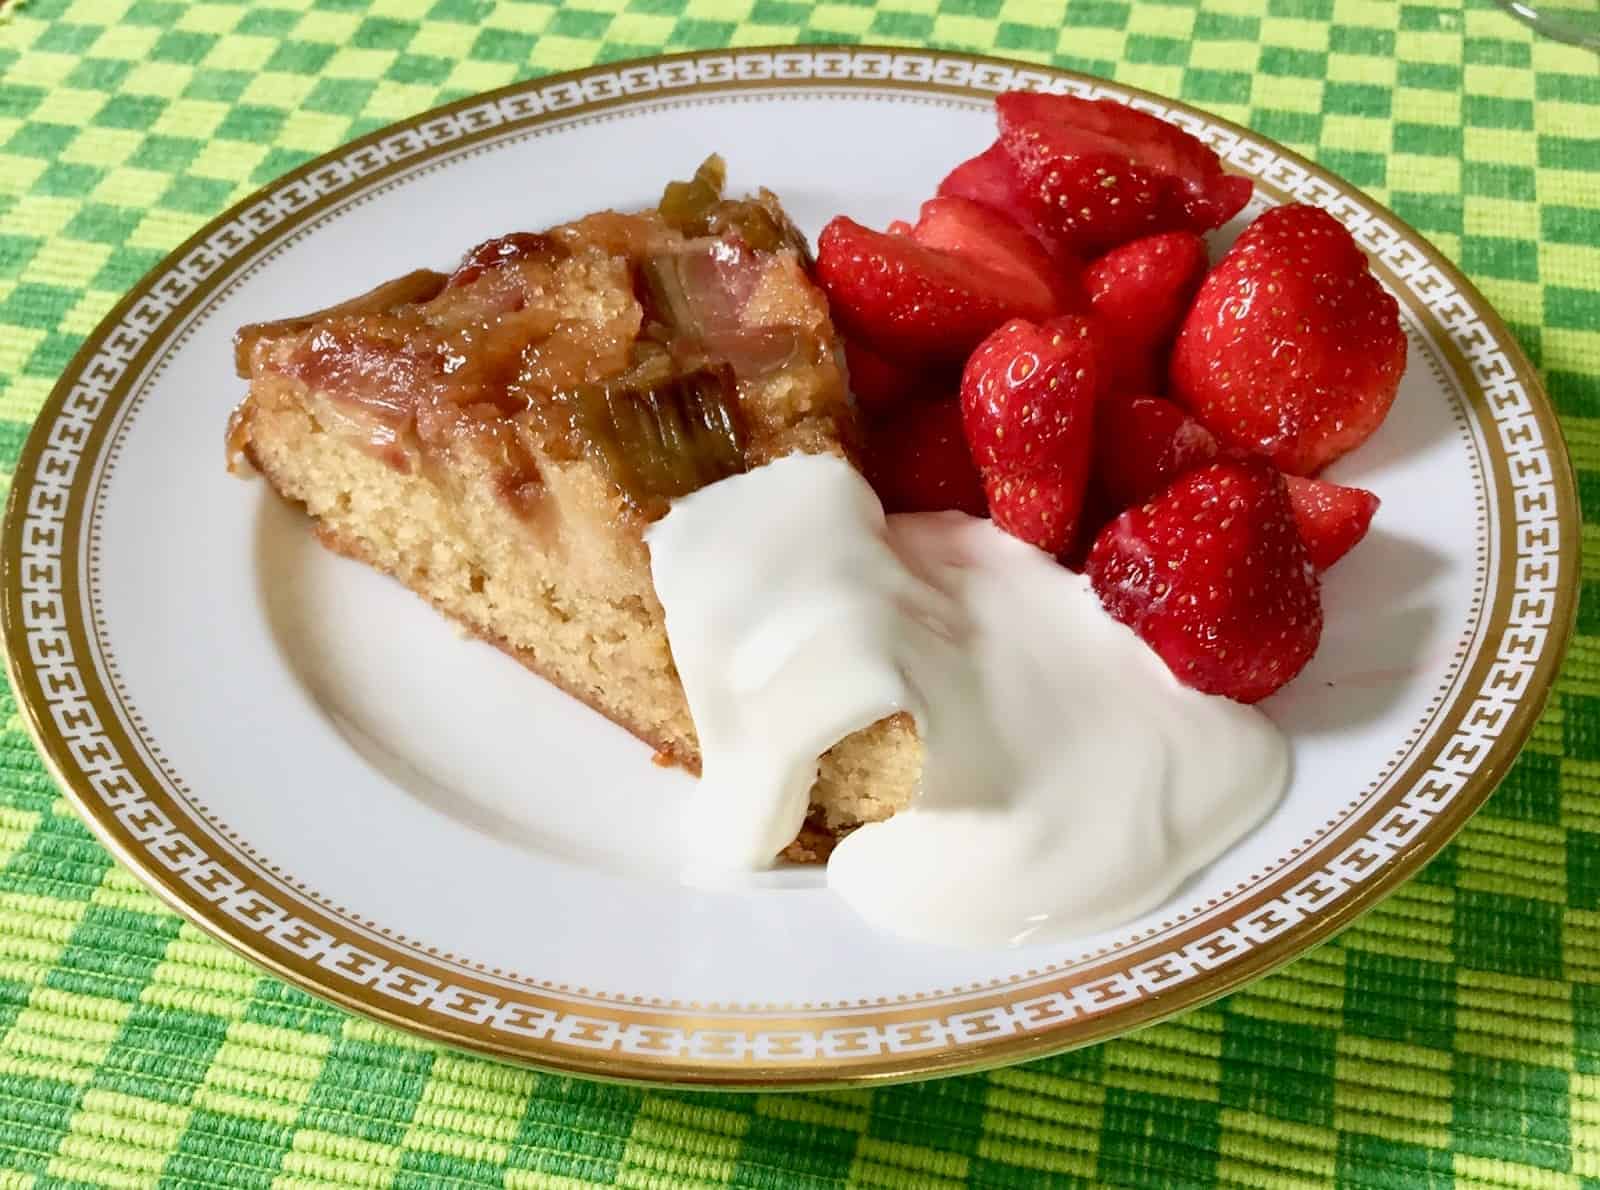 Dorie Greenspan’s Rhubarb Upside-Down Brown Sugar Cake with Fresh Strawberries and Crème Fraiche